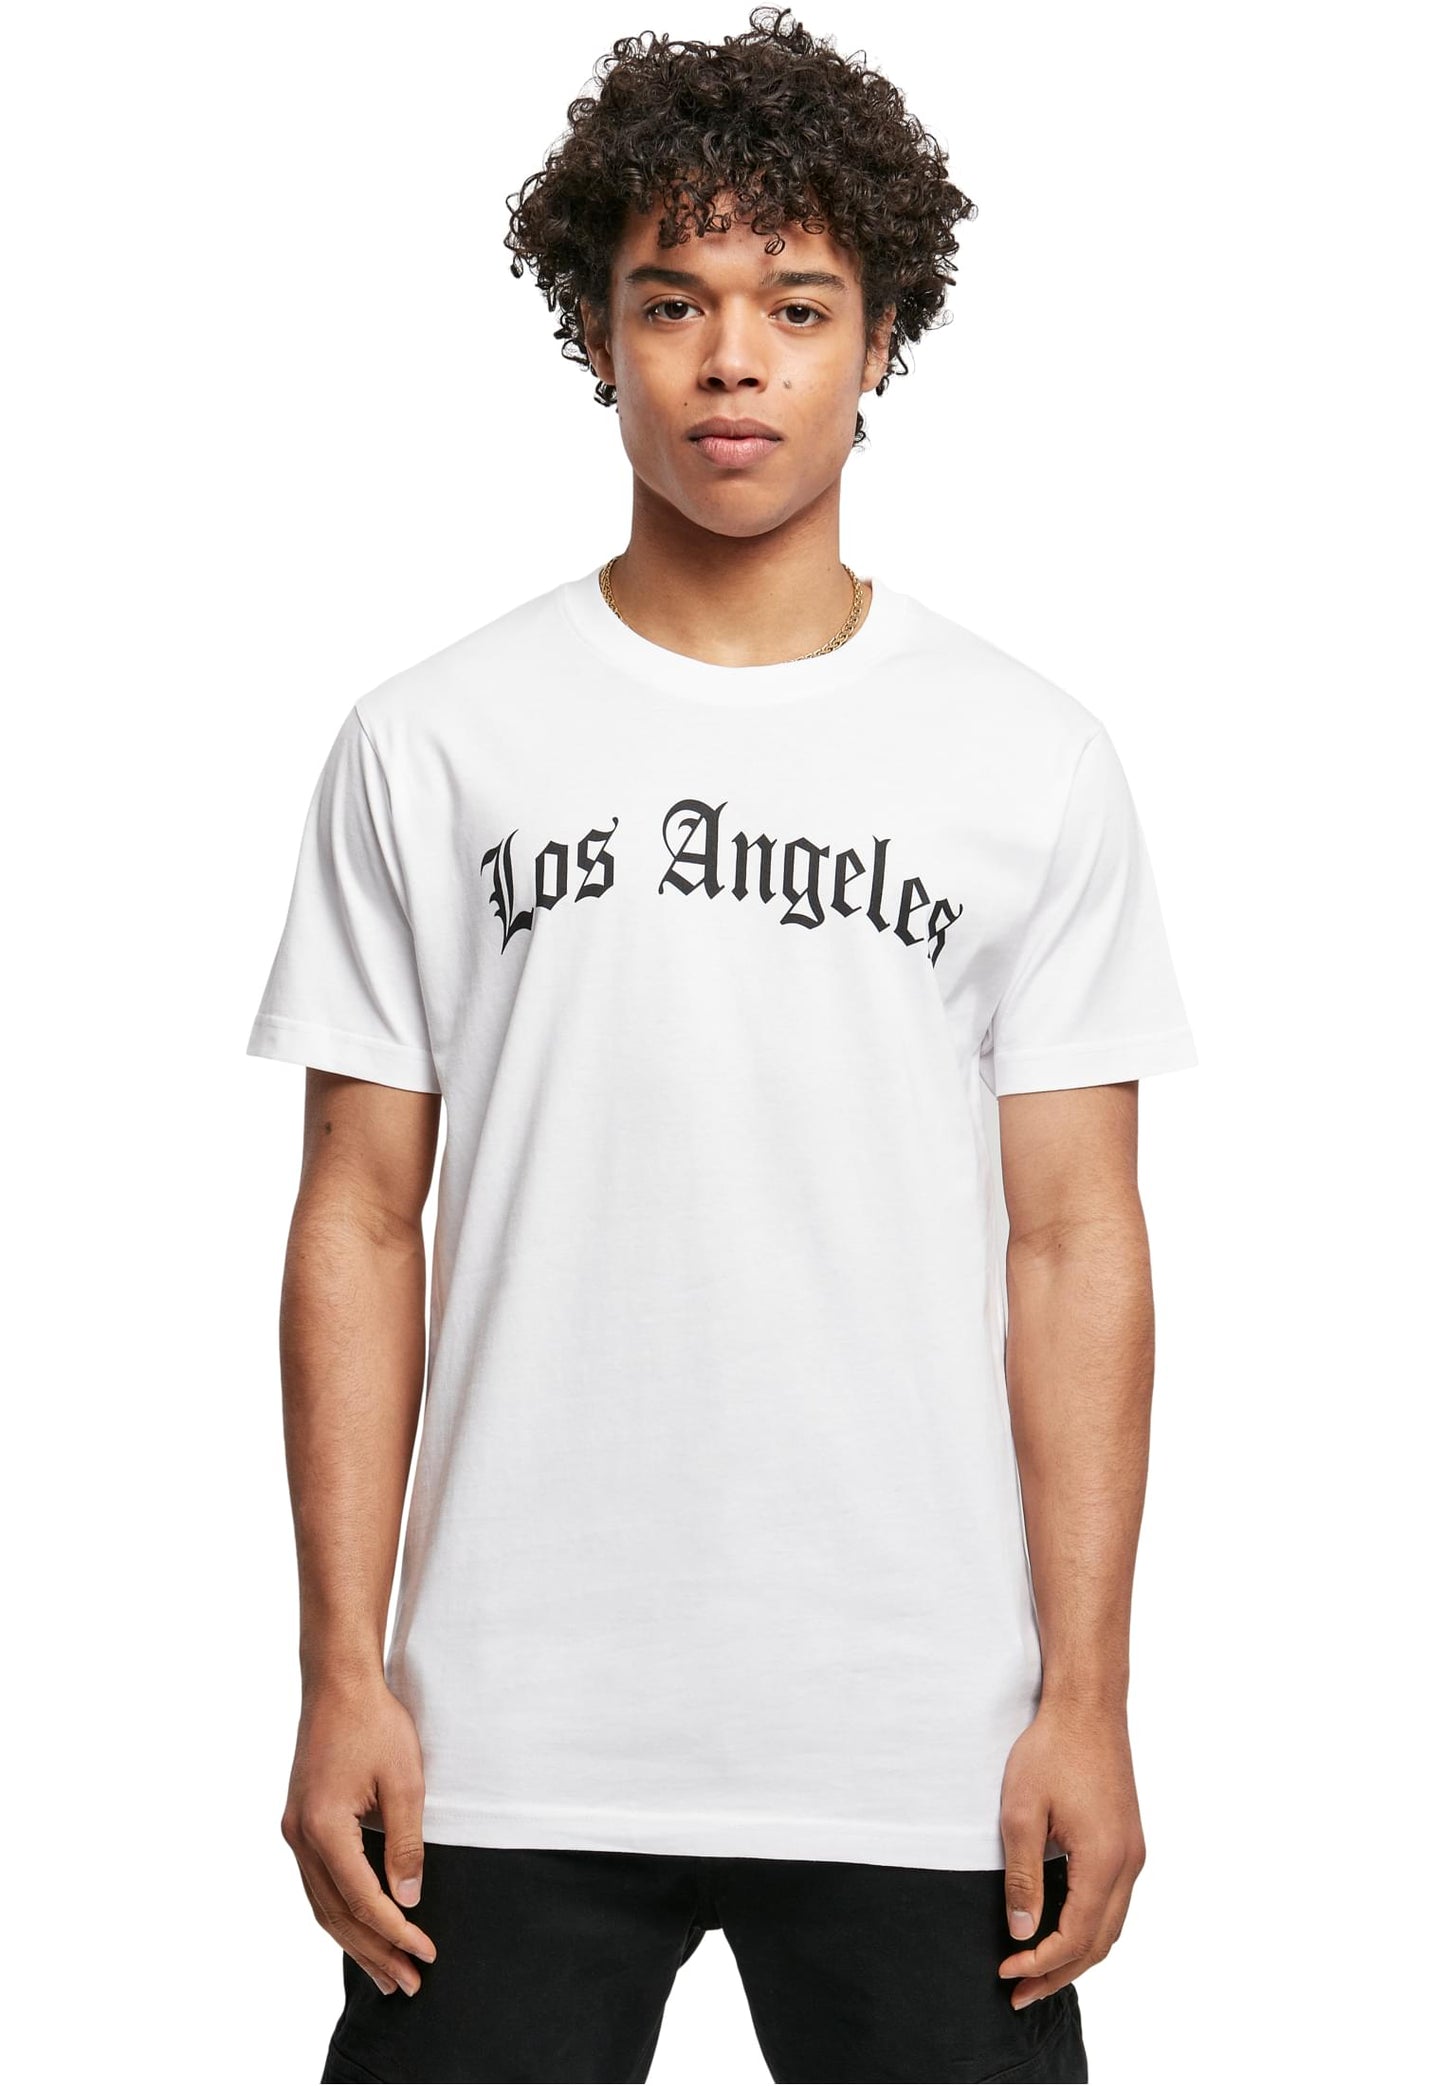 Mister tee Los Angeles Wording Short Sleeve Round Neck T-Shirt